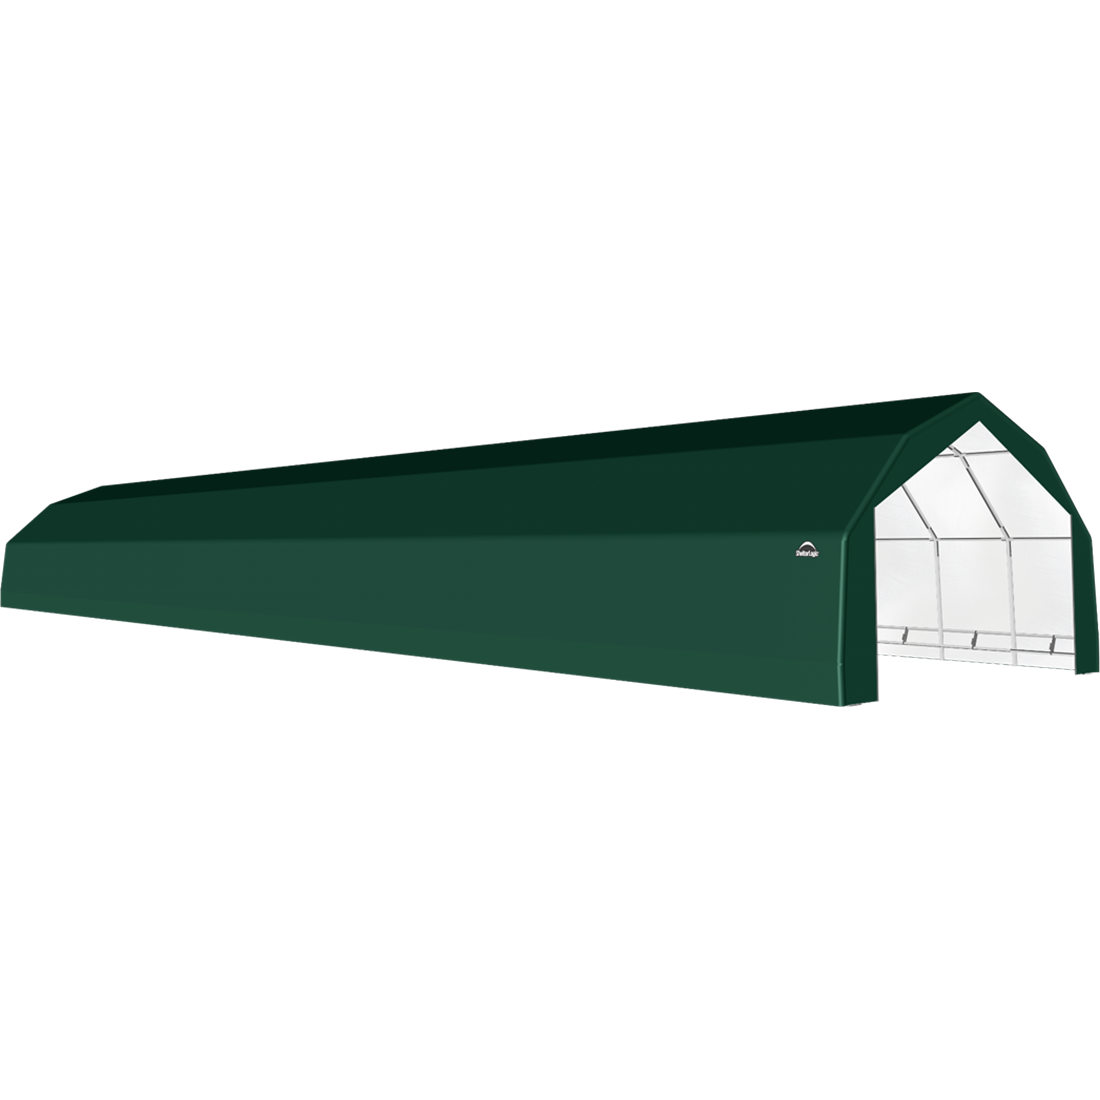 ShelterTech SP Series Barn Shelter, 20 ft. x 96 ft. x 12 ft. Heavy Duty PVC 14.5 oz. Green